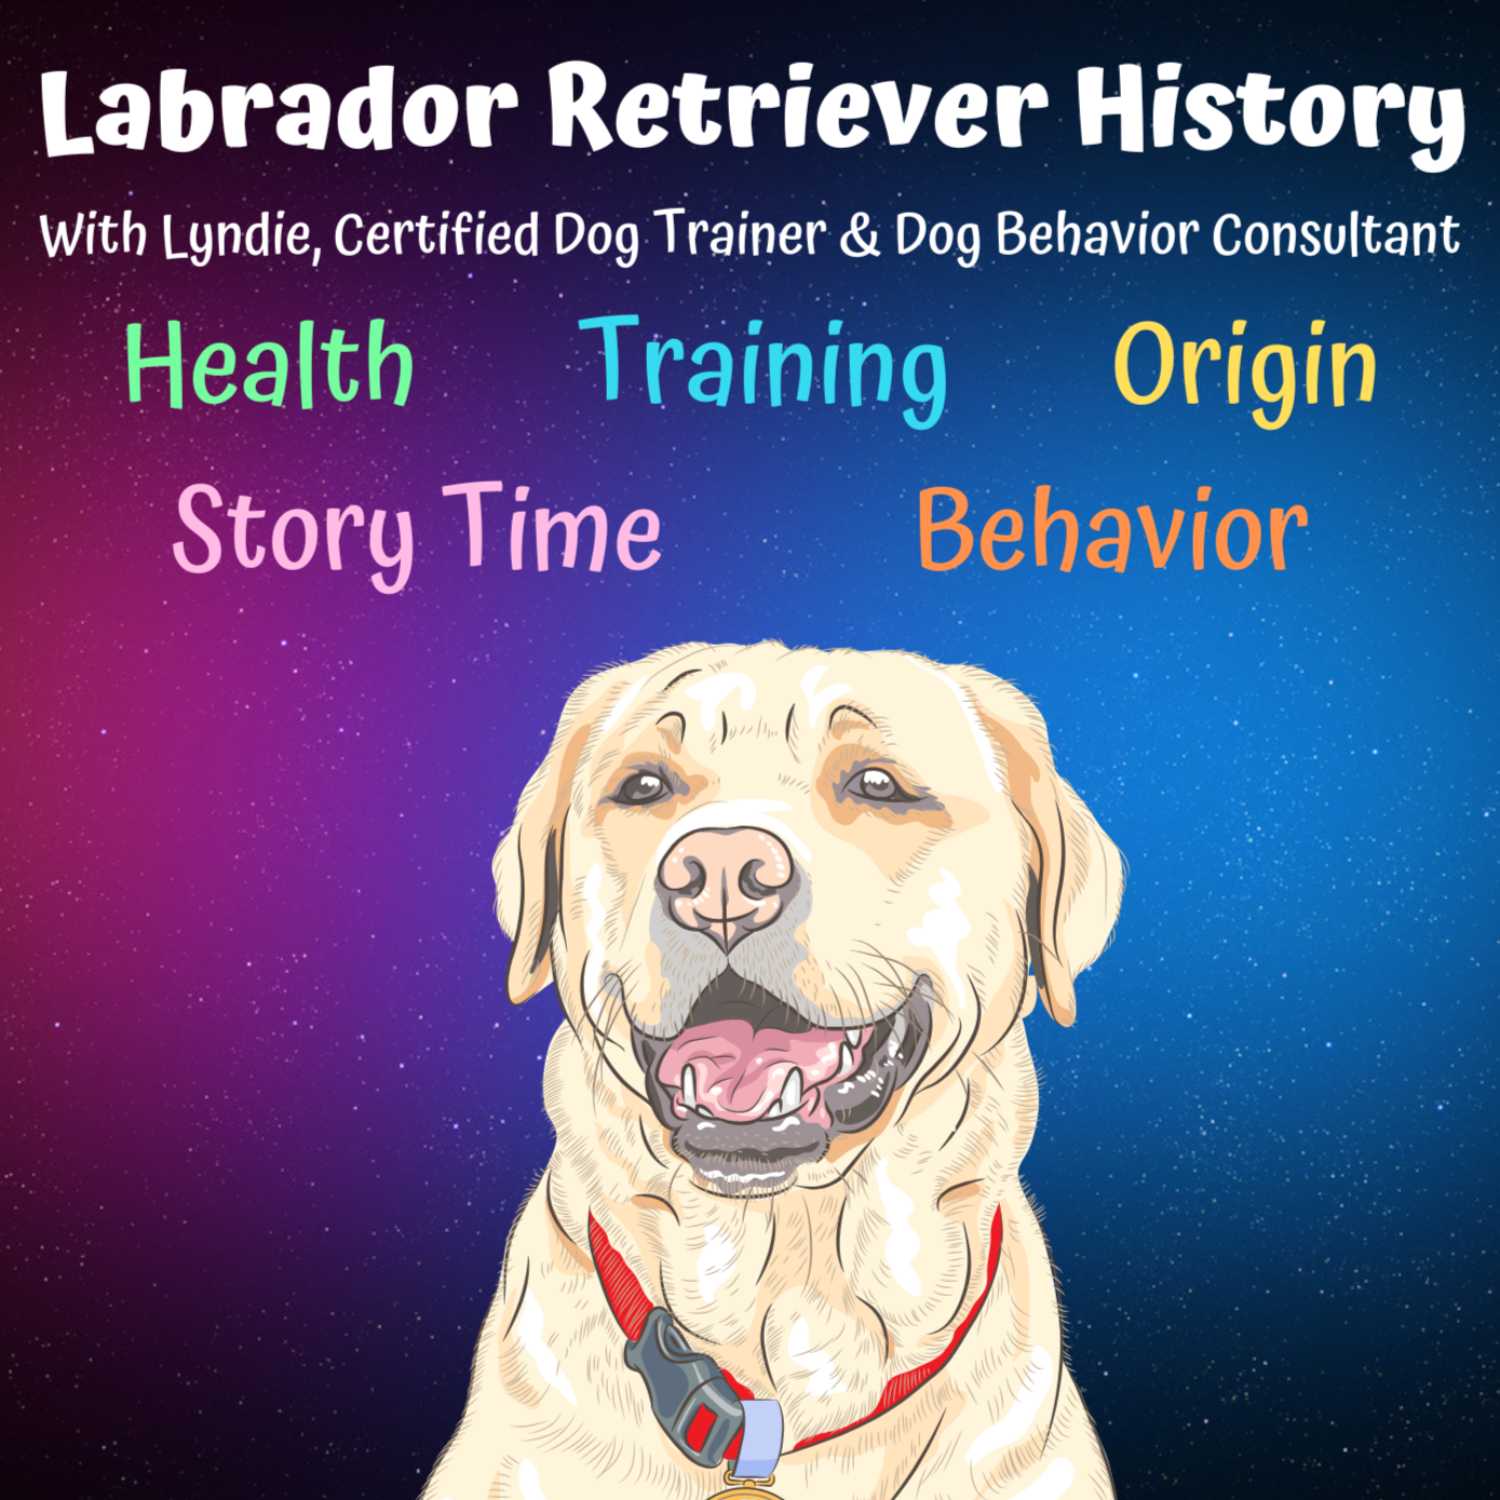 Labrador Retriever History - Dogs 101 - Everything You Need to Know About the Labrador Retriever Dog Breed